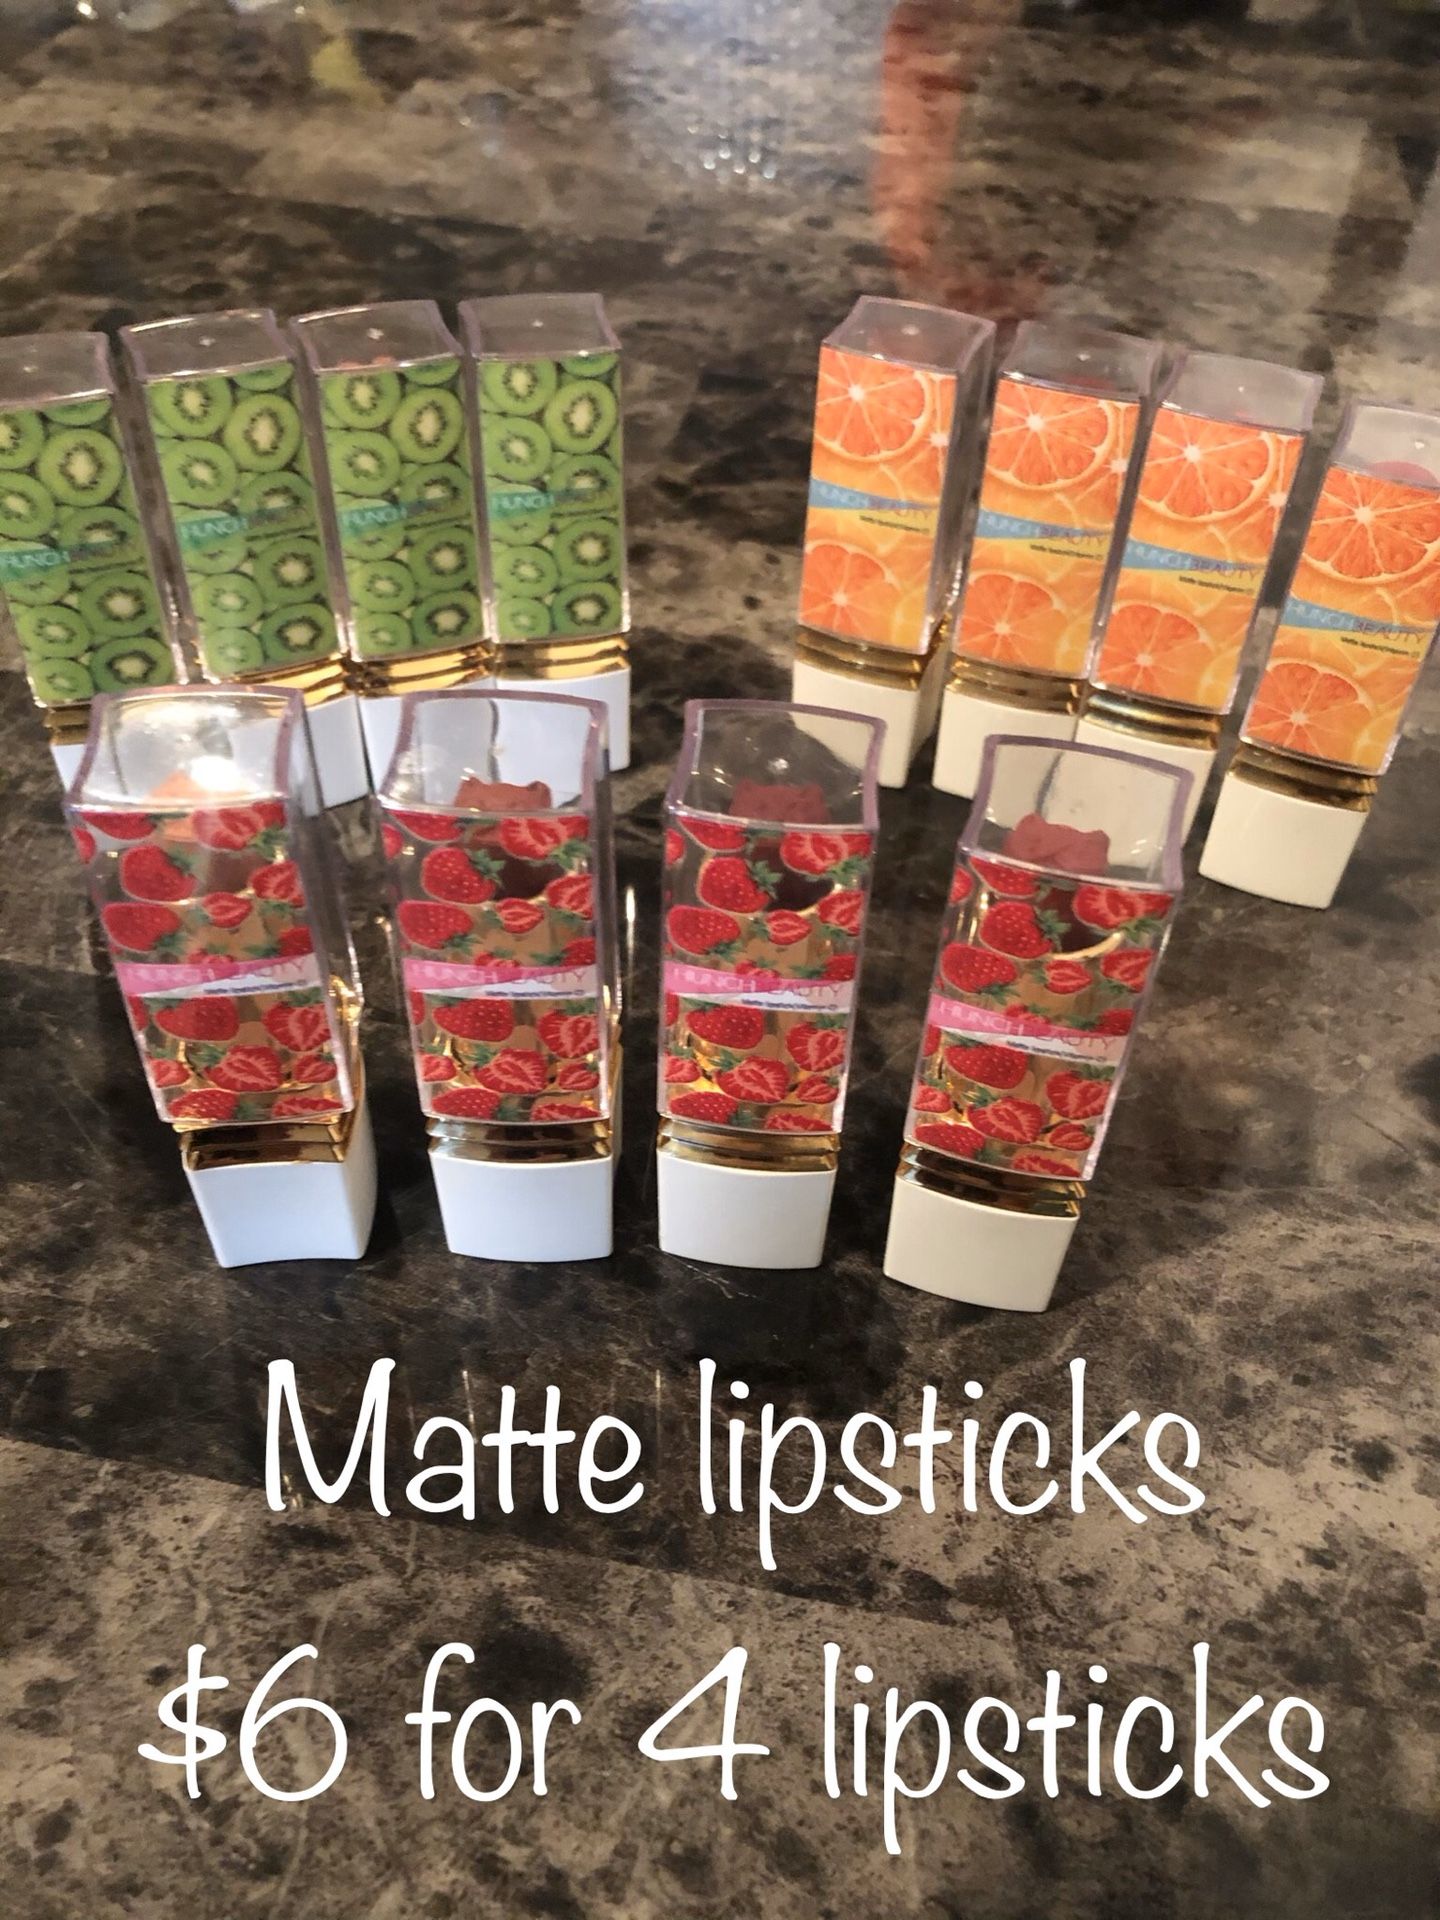 Matte lipsticks